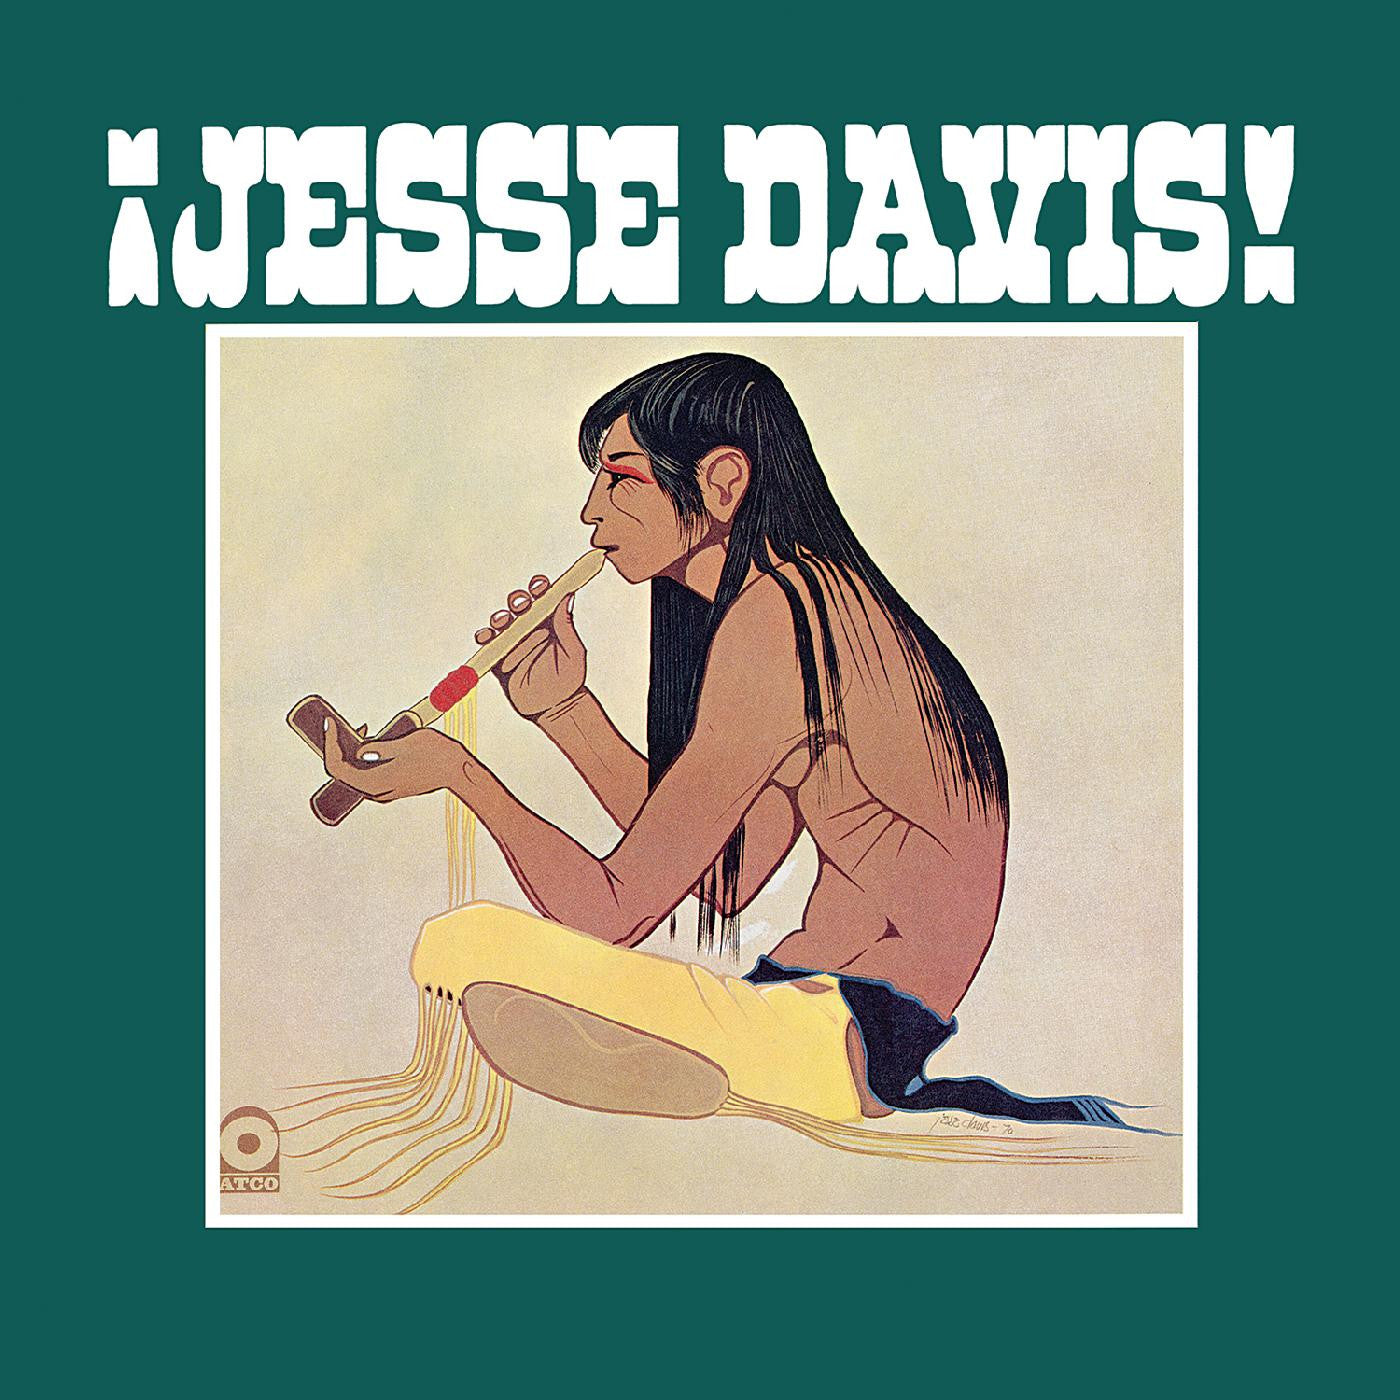 Jesse Ed Davis - Jesse Davis (Green Vinyl LP)